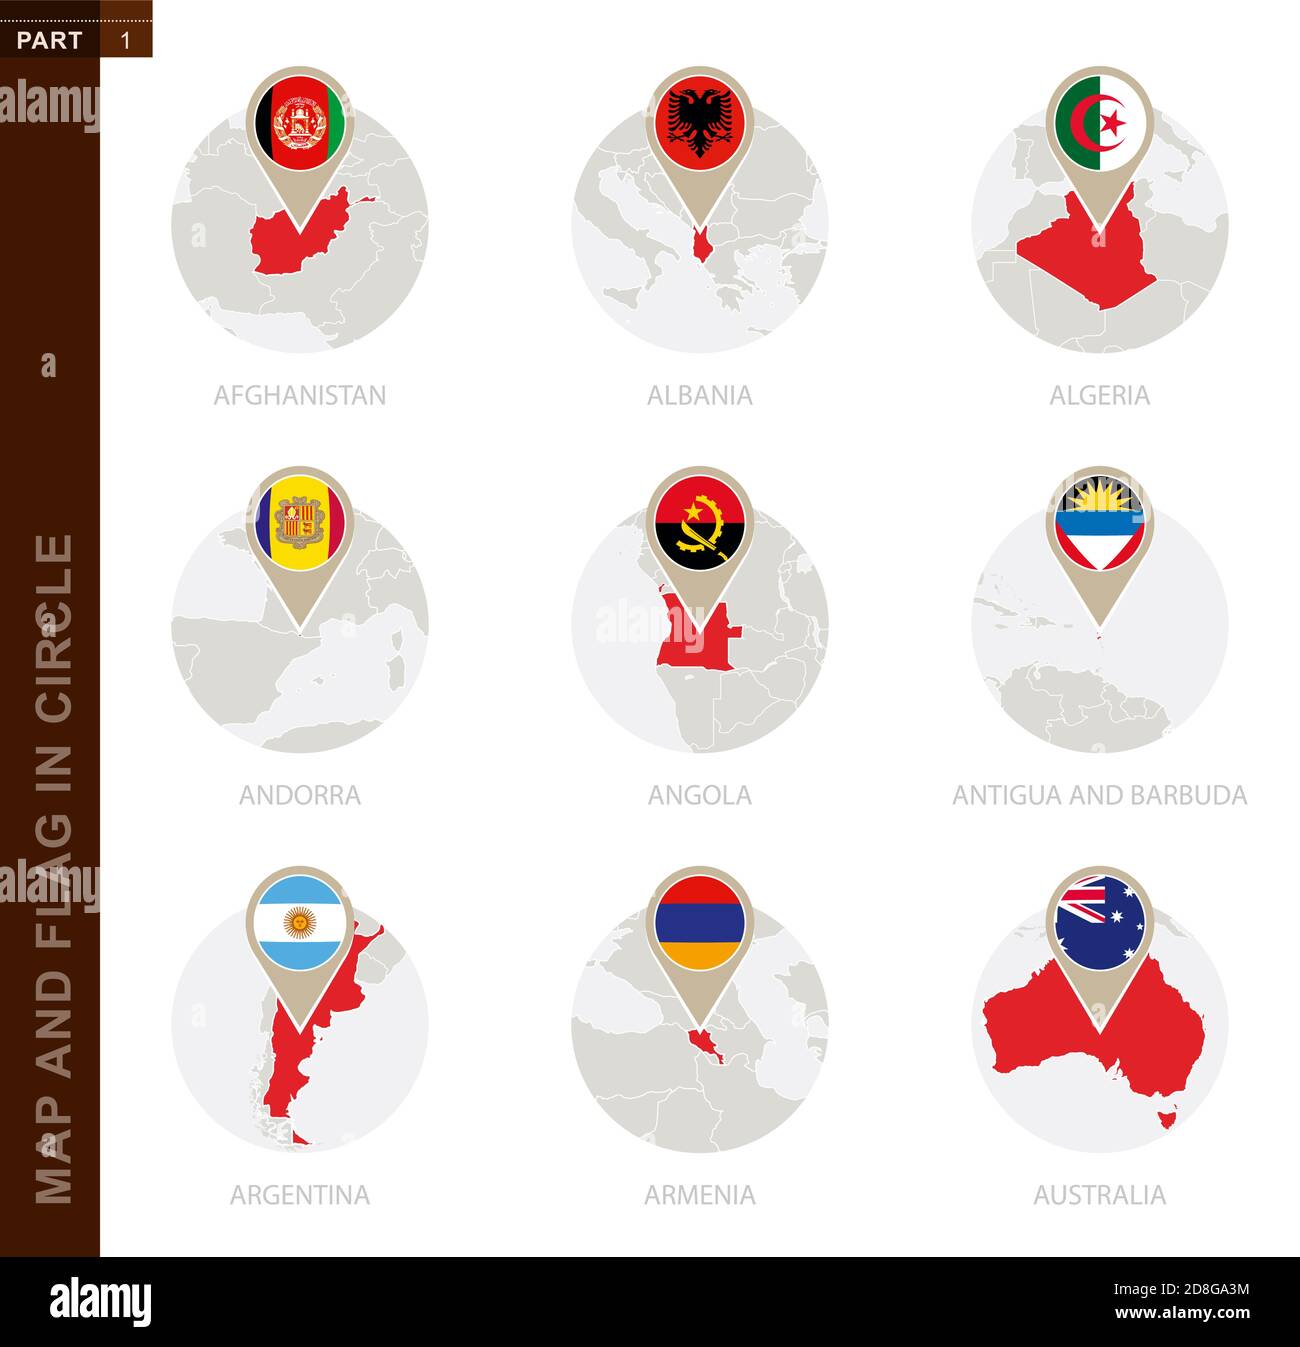 Map and Flag in a circle of 9 Countries: Afghanistan, Albania, Algeria, Andorra, Angola, Antigua and Barbuda, Argentina, Armenia, Australia Stock Vector